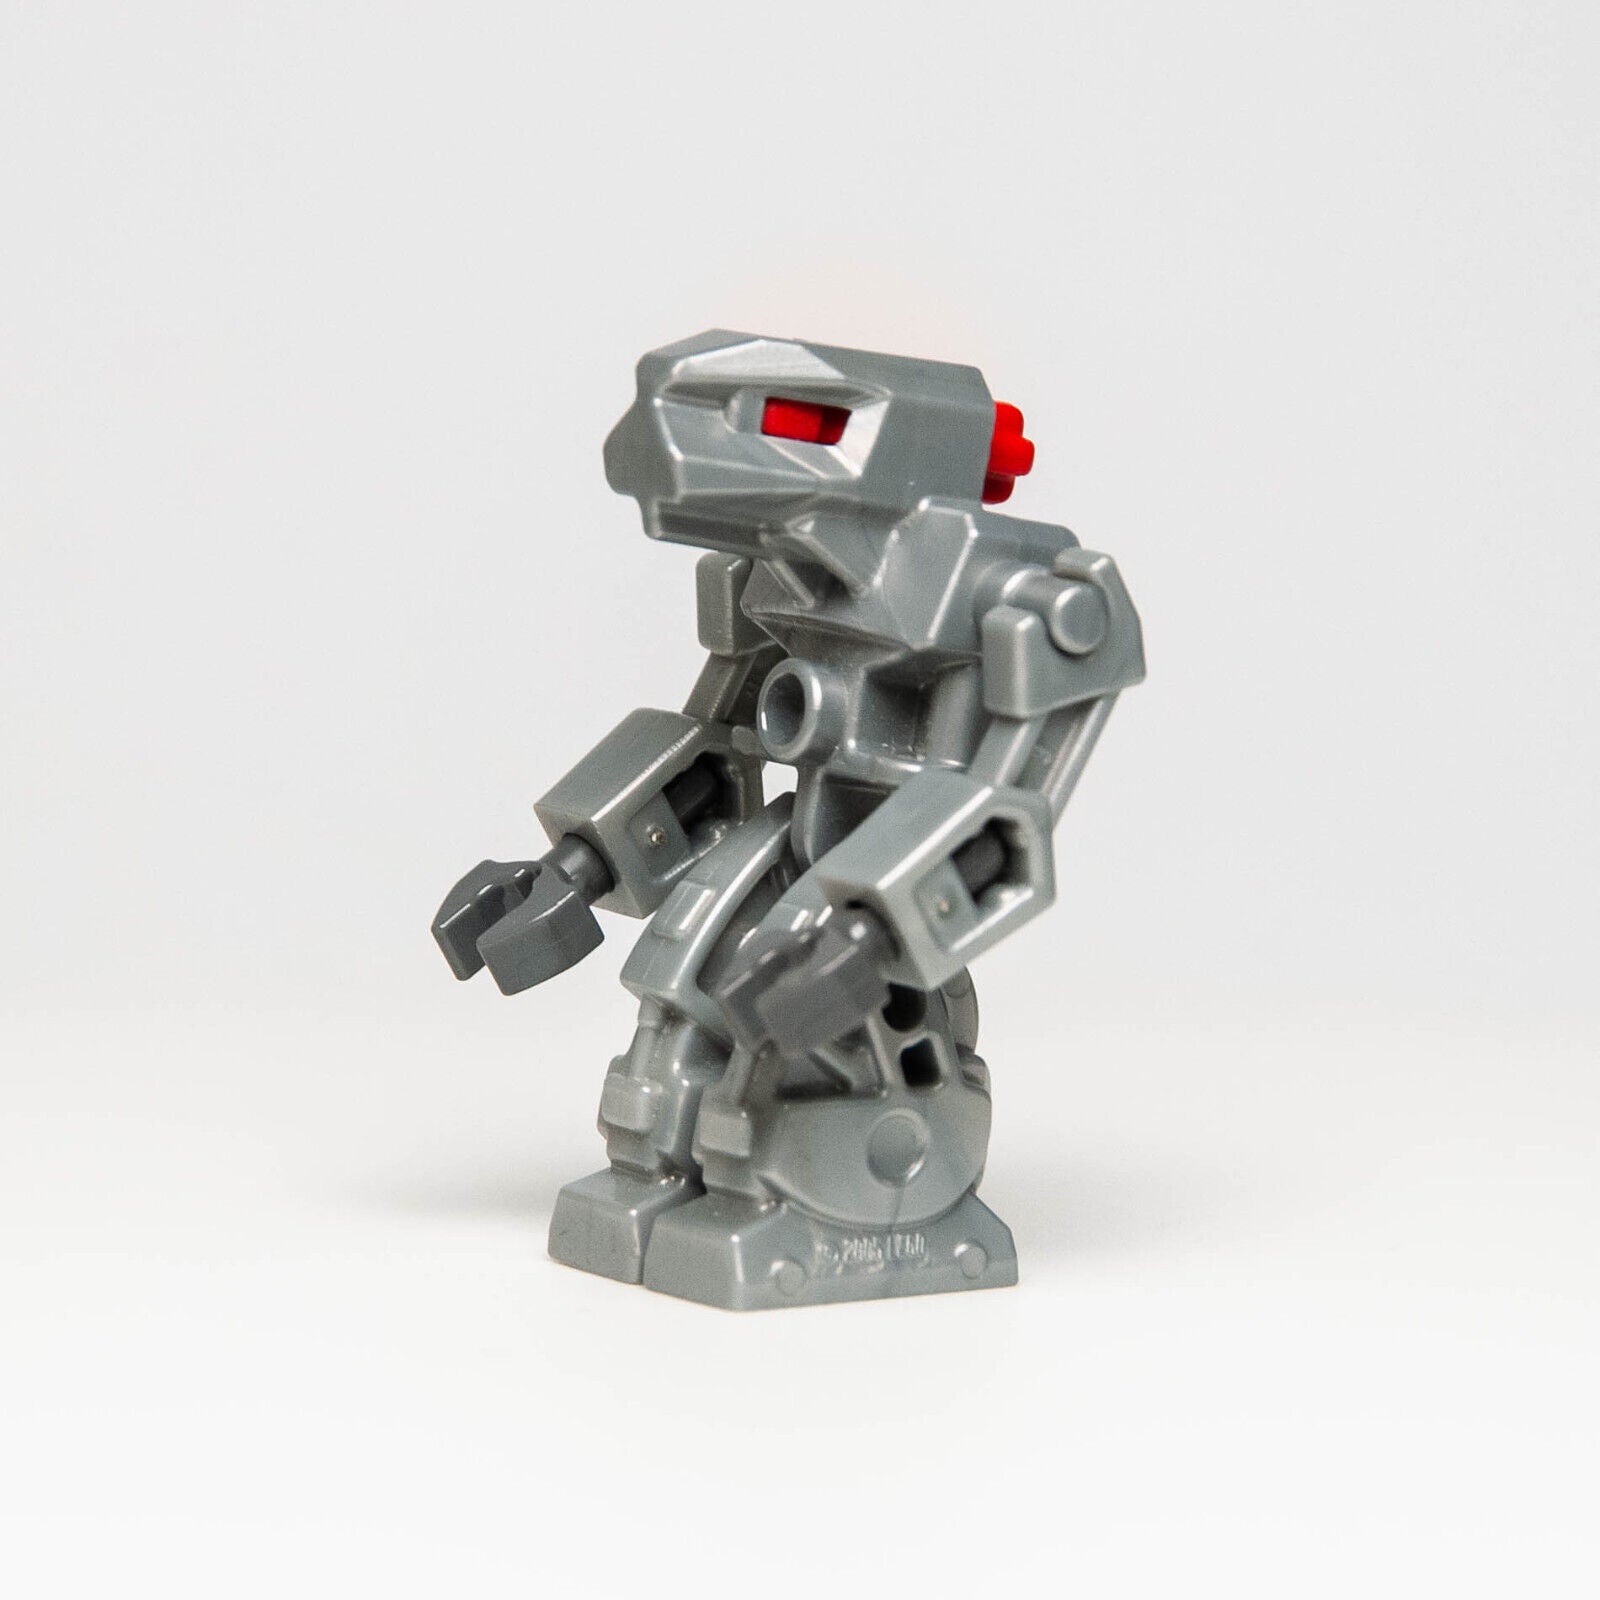 LEGO Minifigure Exo Force Devastator - Pearl Light Gray, Red Eyes (exf015)